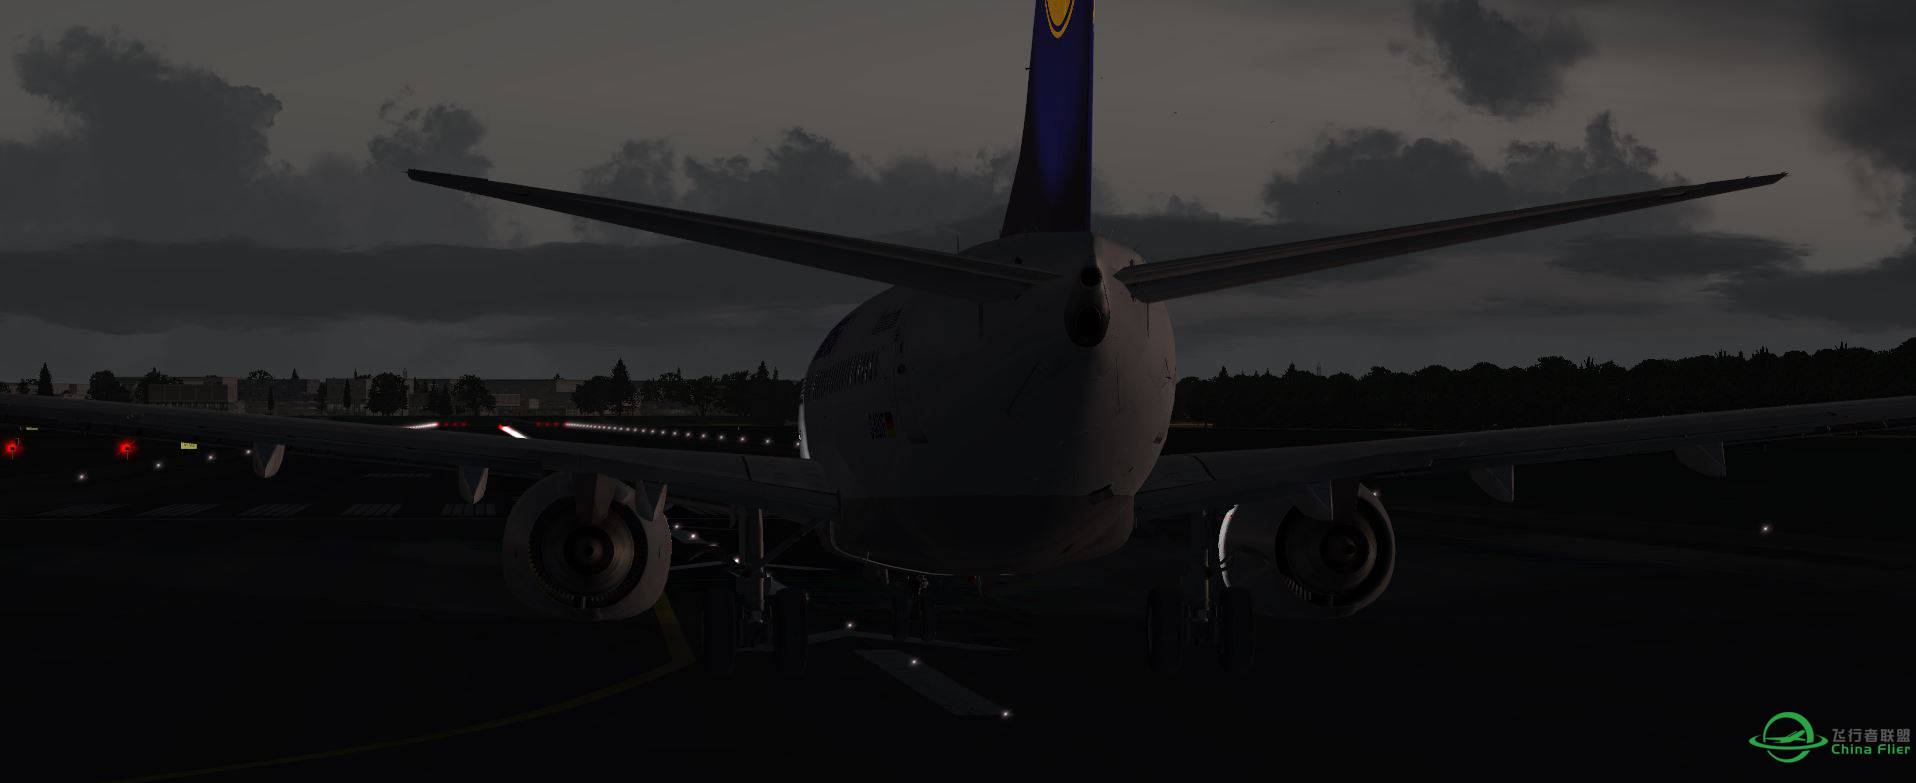 B737 Lufthansa-3622 